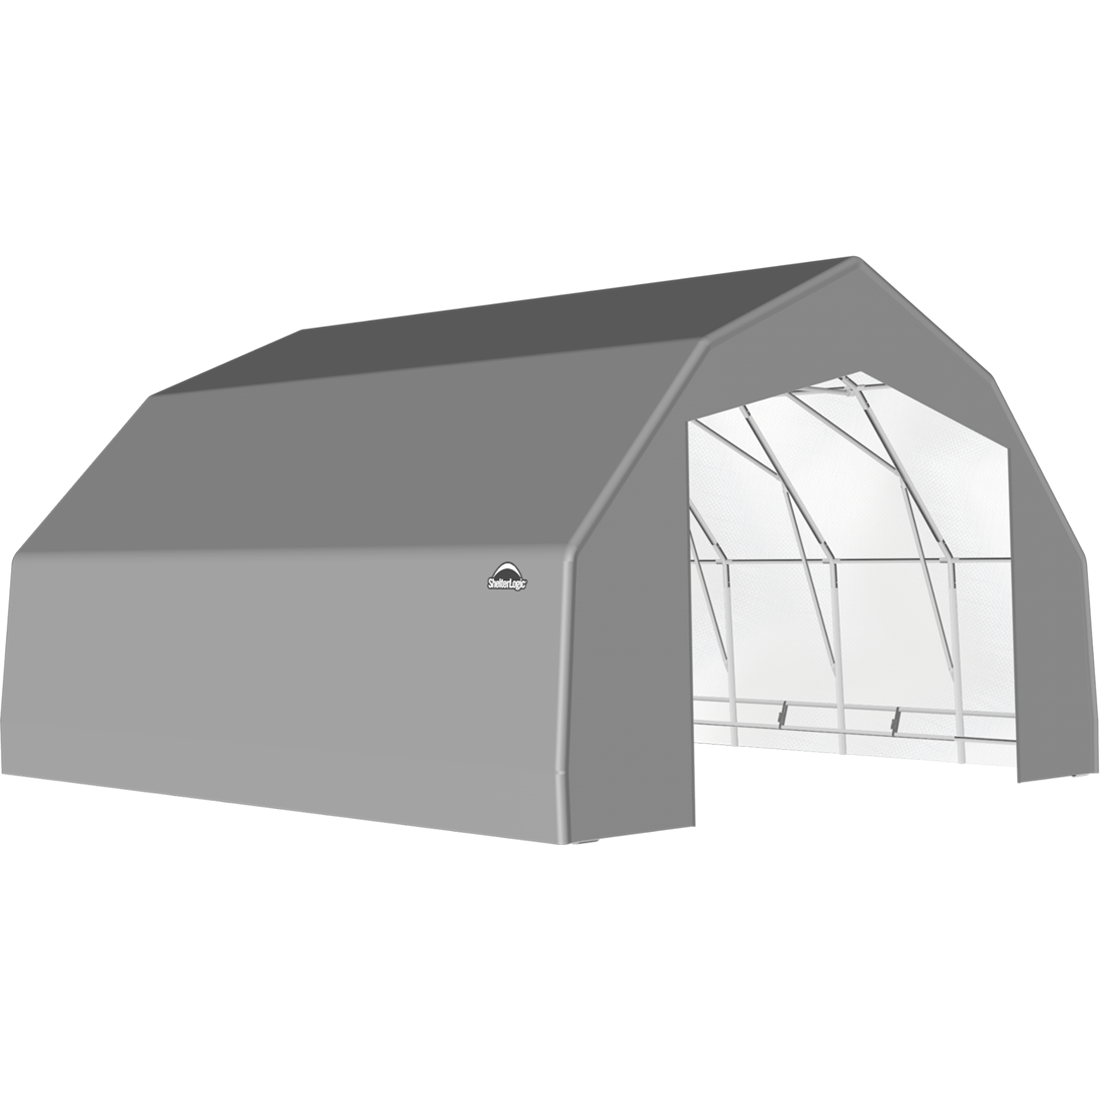 ShelterTech SP Series Barn Shelter, 25 ft. x 28 ft. x 14 ft. Heavy Duty PVC 14.5 oz. Gray